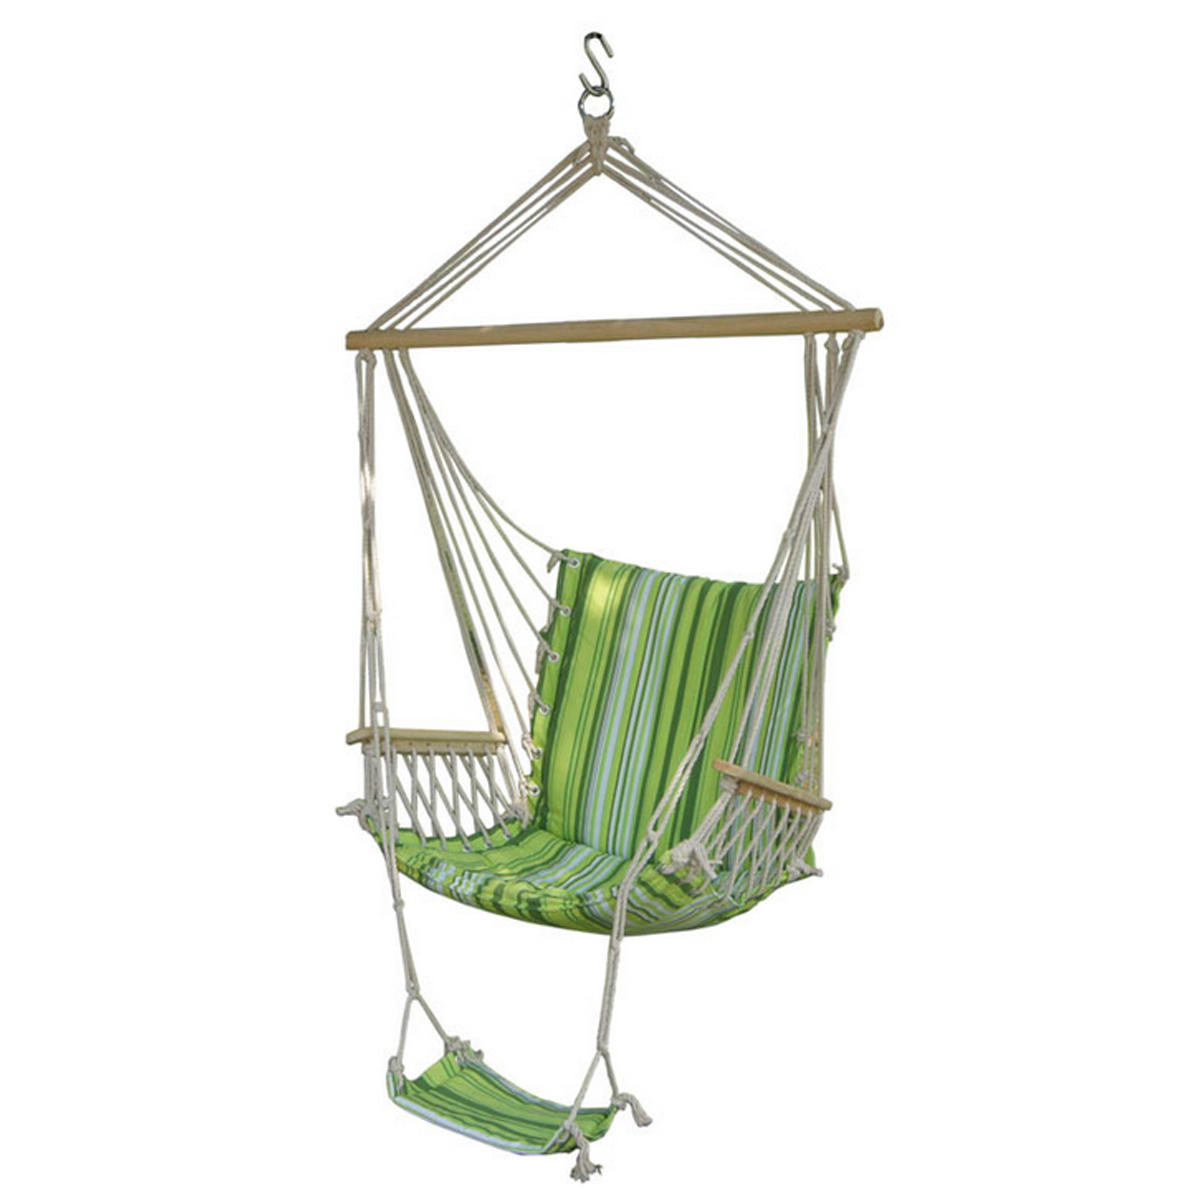 IPRee ™ Outdoor Tuval Swing Hamak Hareketli Asma Sandalye Bahçe Bahçe Mobzası Max 330Lbs